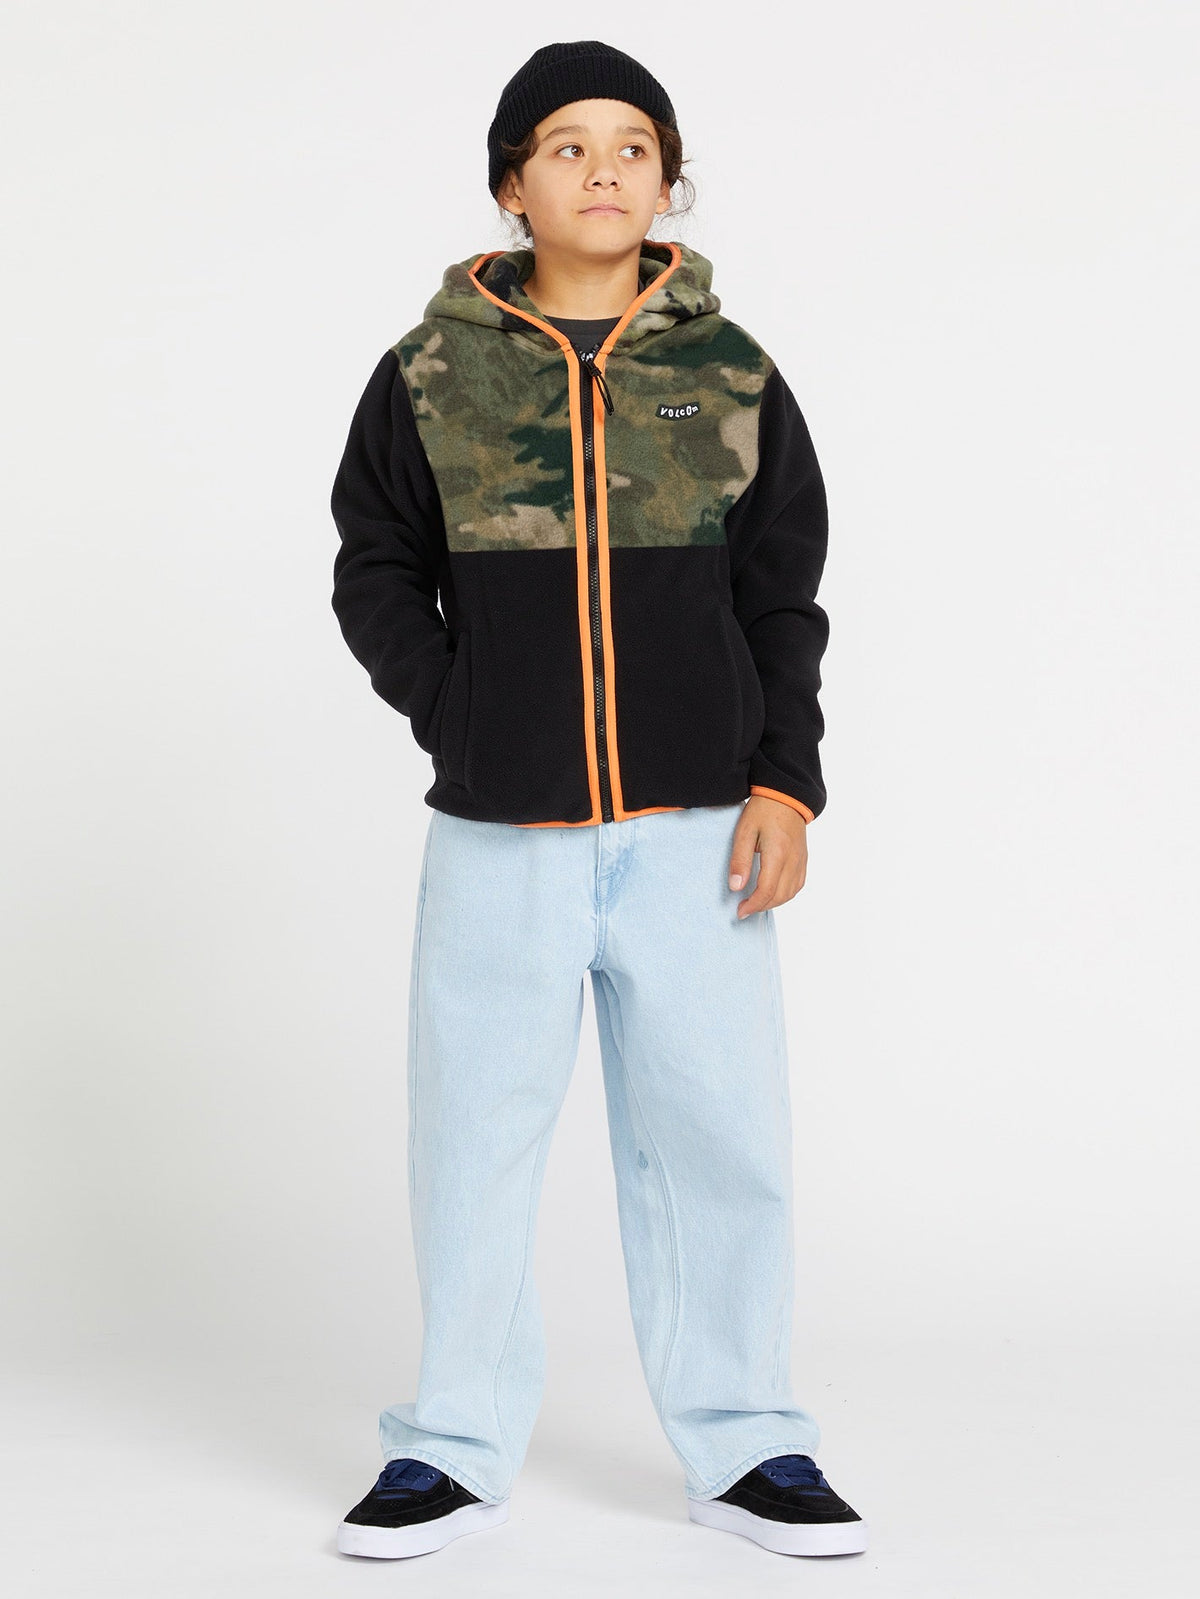 Volcom Polar Fleece Zip Boys Jacket (Age 8-14) Camouflage